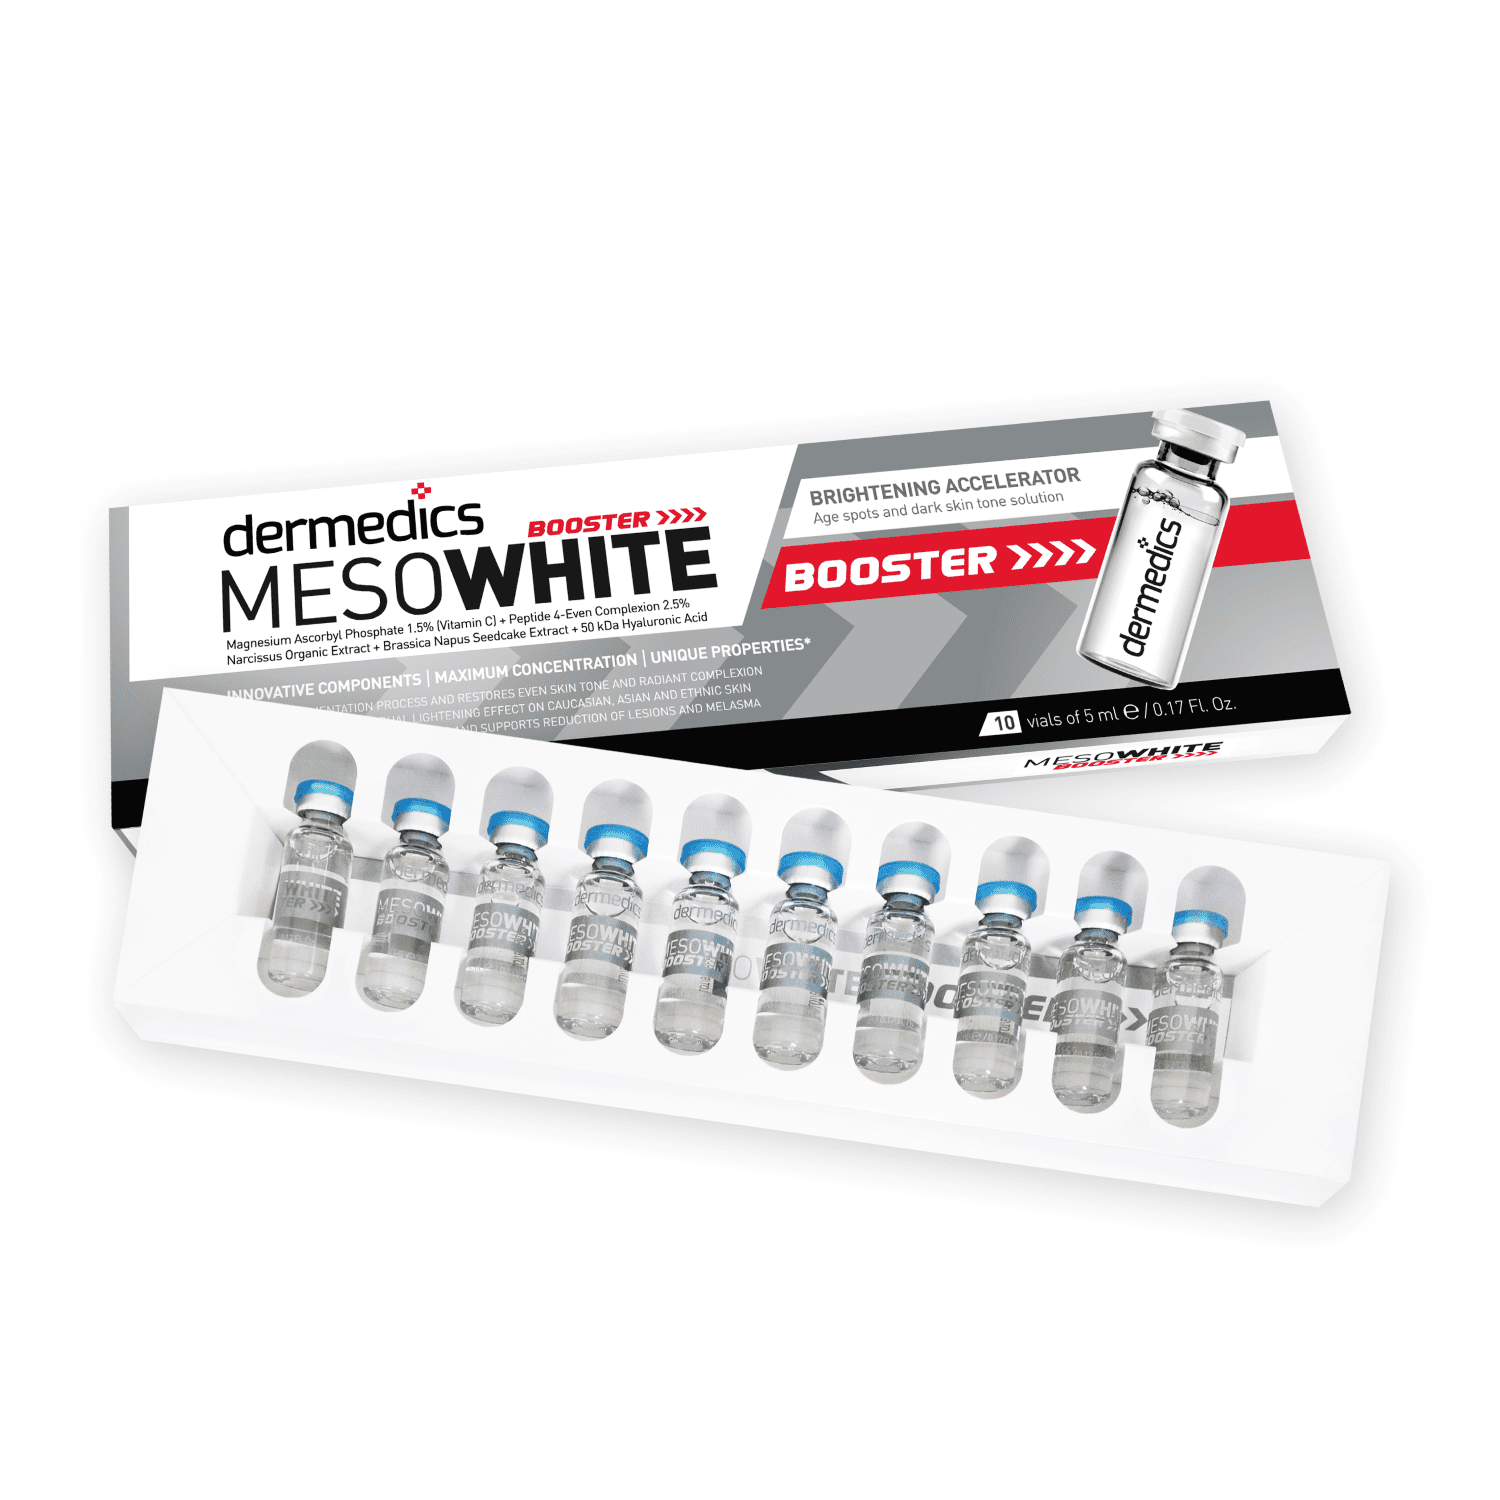 Dermedics meso white booster whitening 